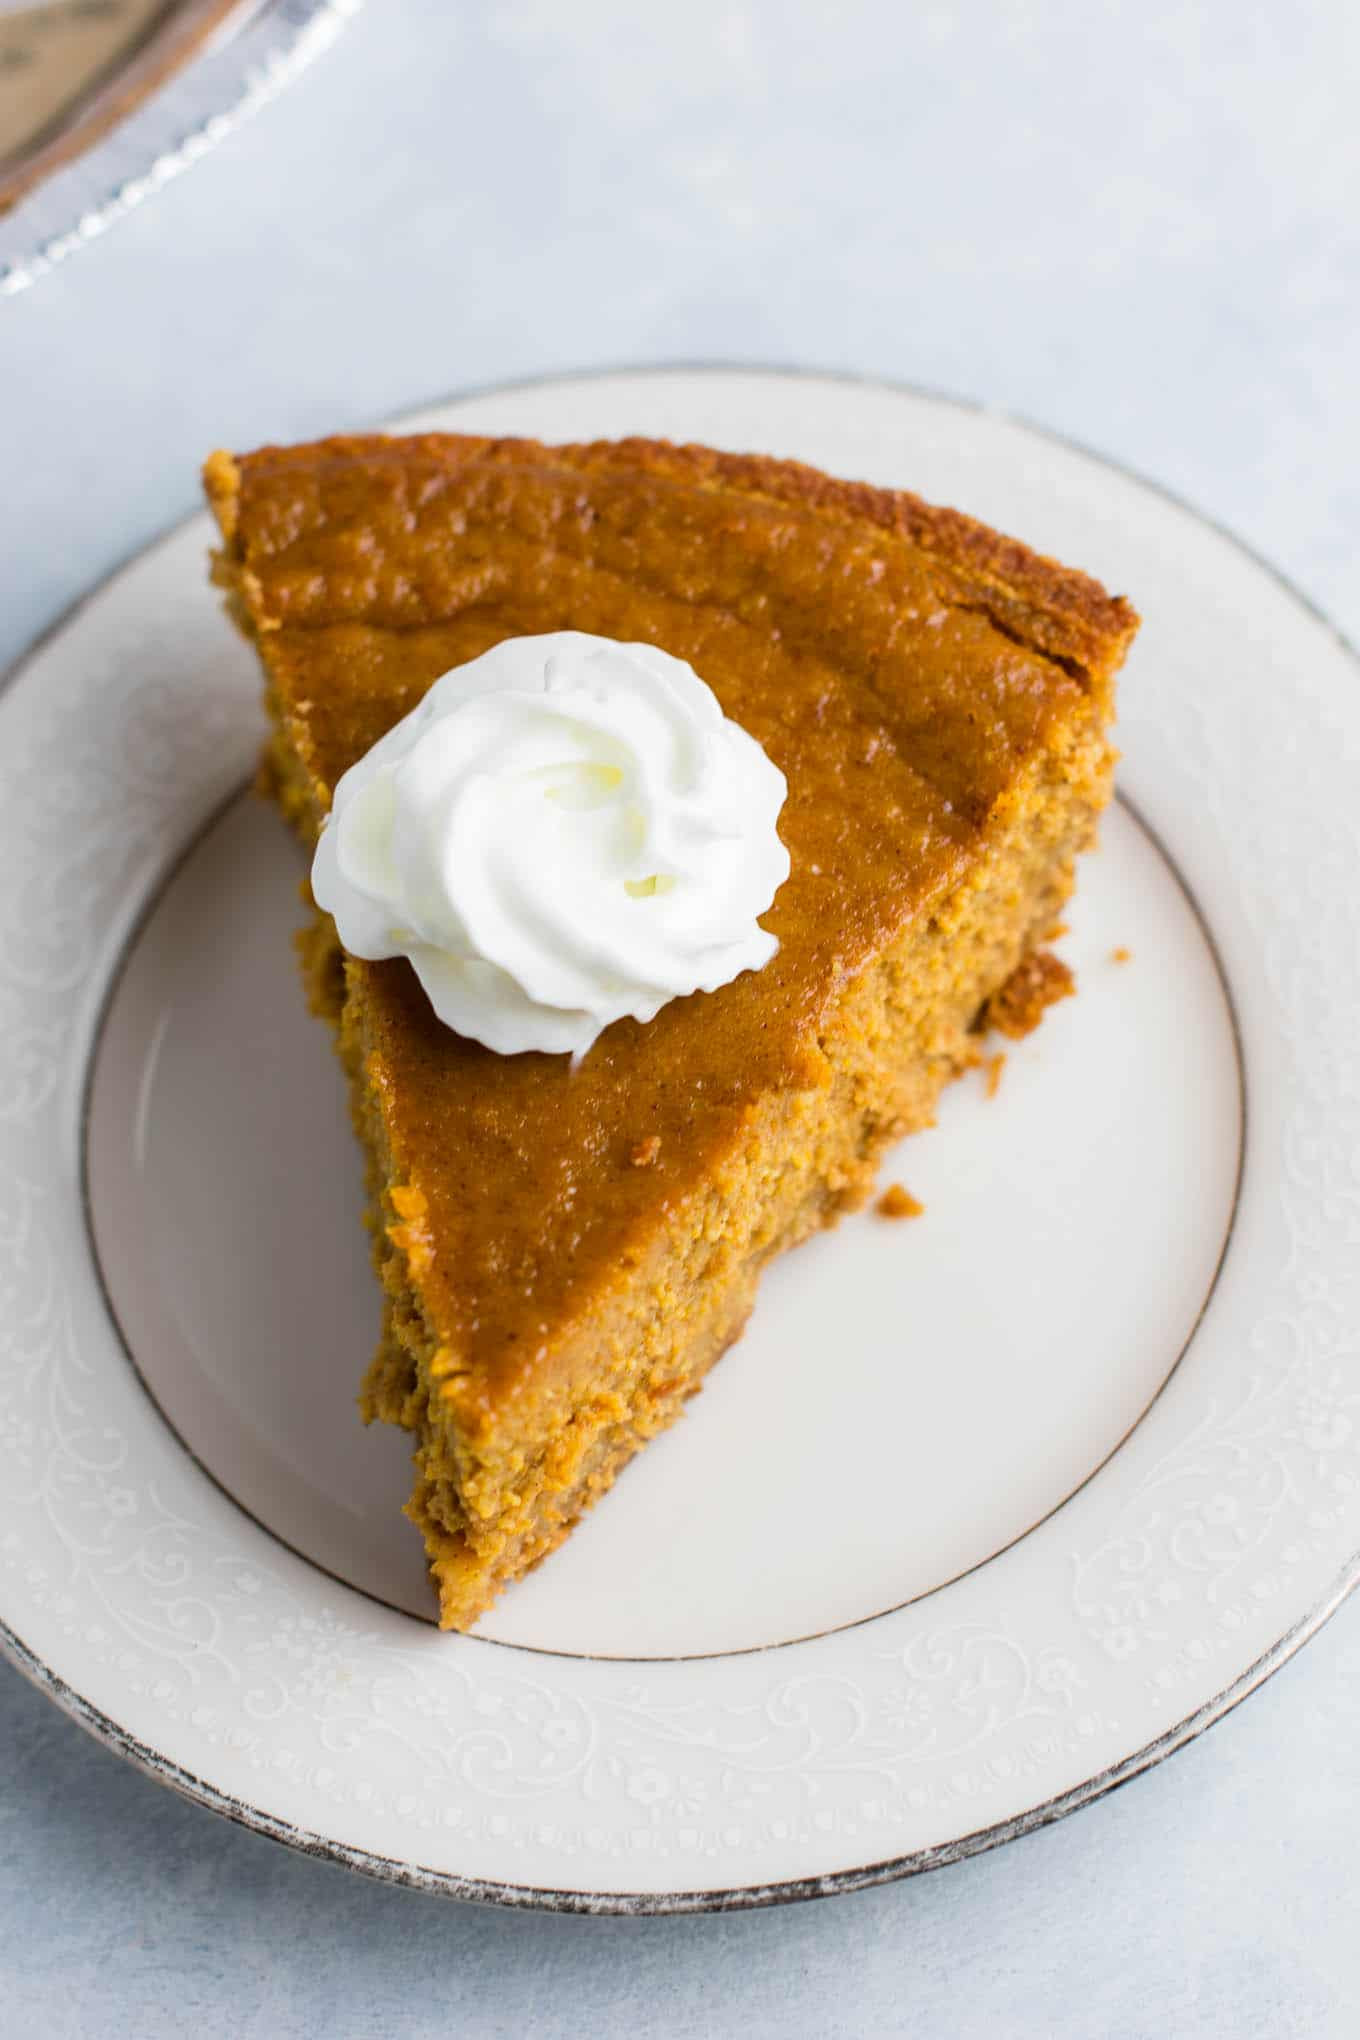 Top 15 Most Shared Gluten Free Pumpkin Pie